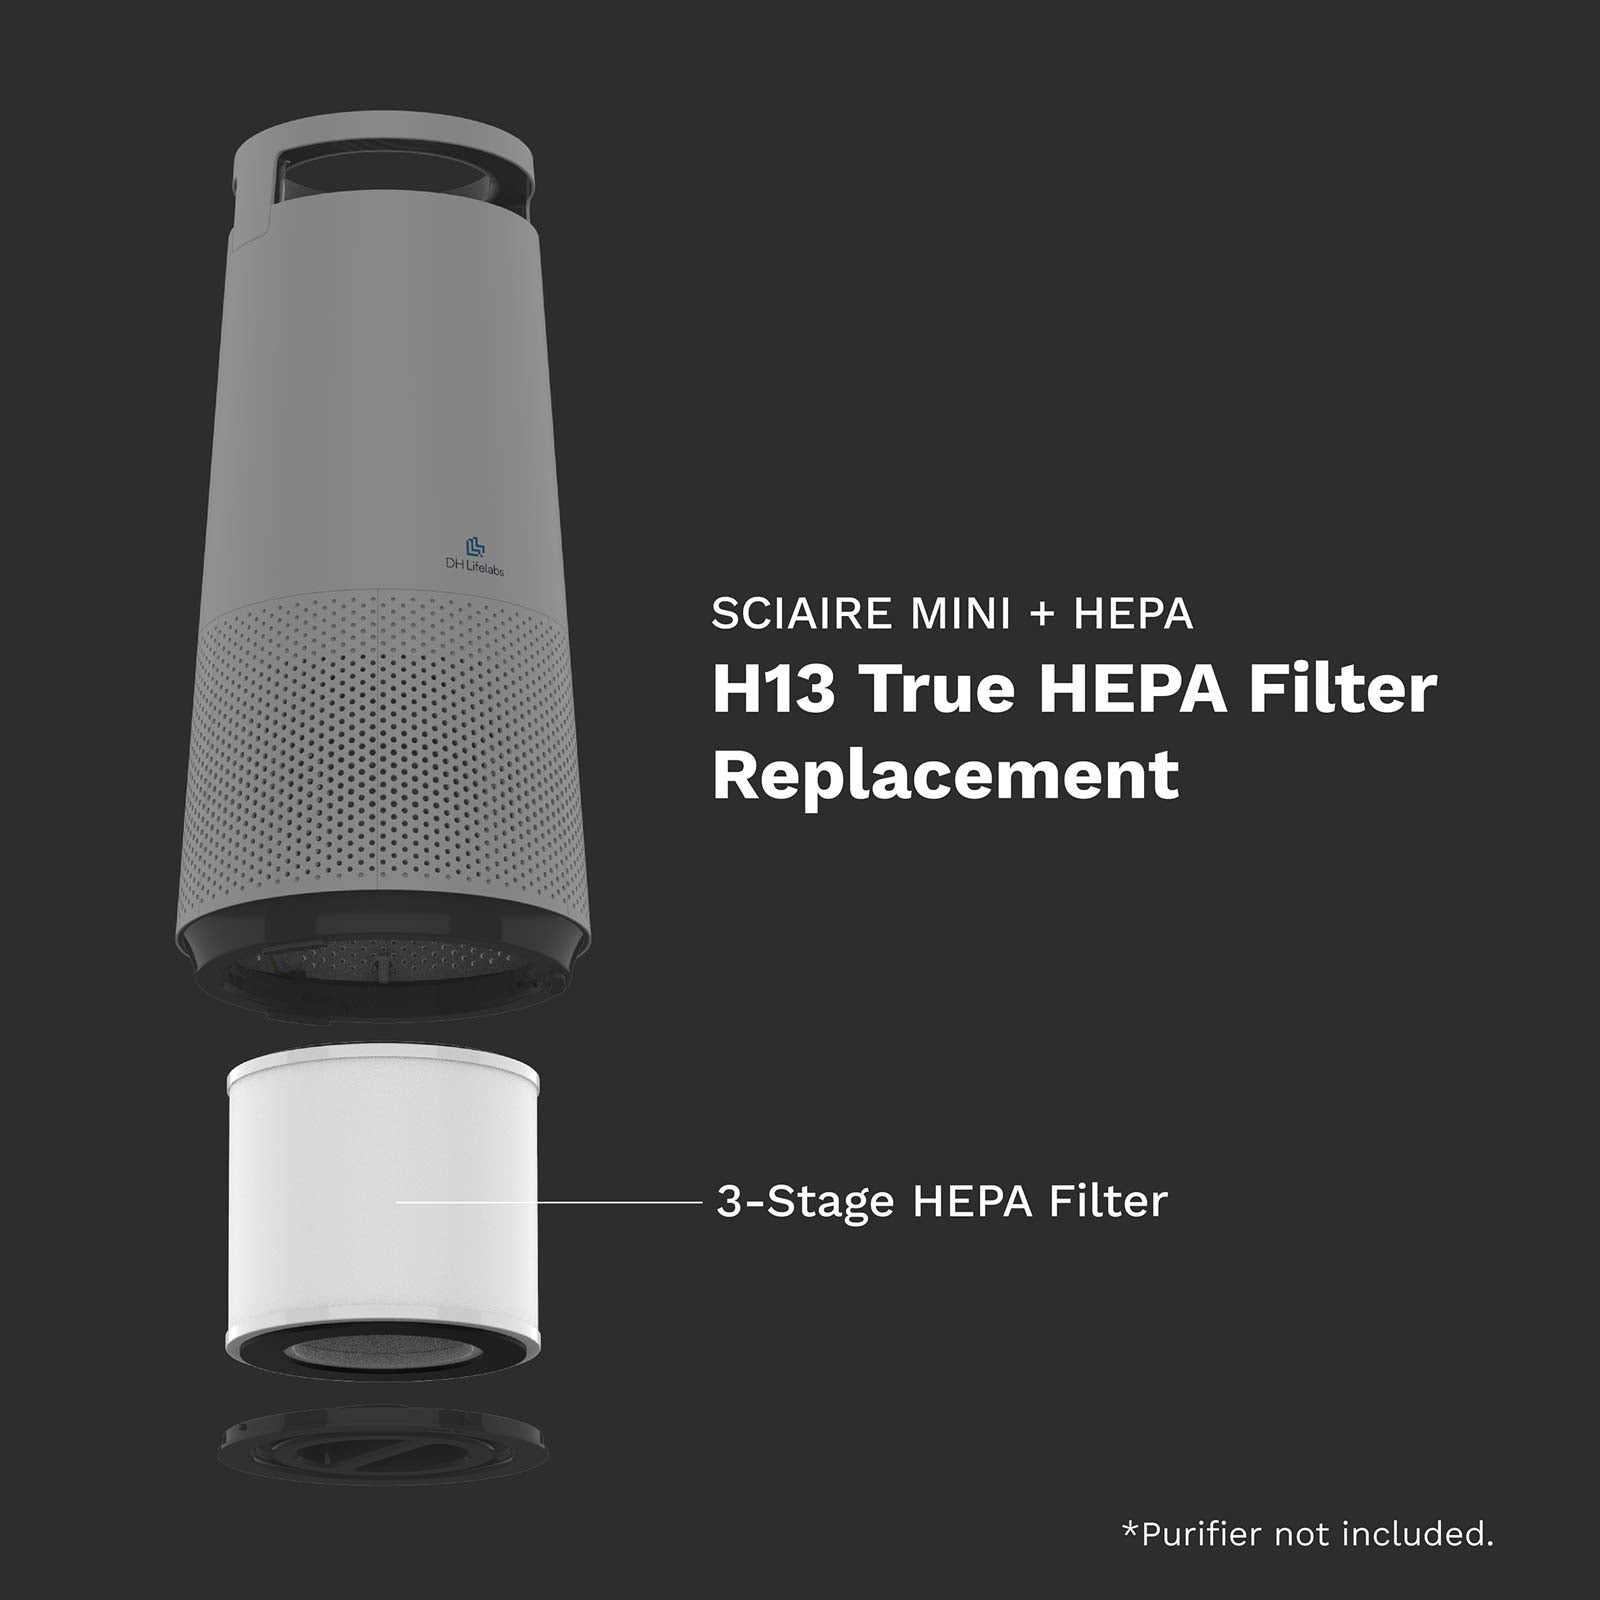 Sciaire Mini + HEPA / H13 True HEPA Filter